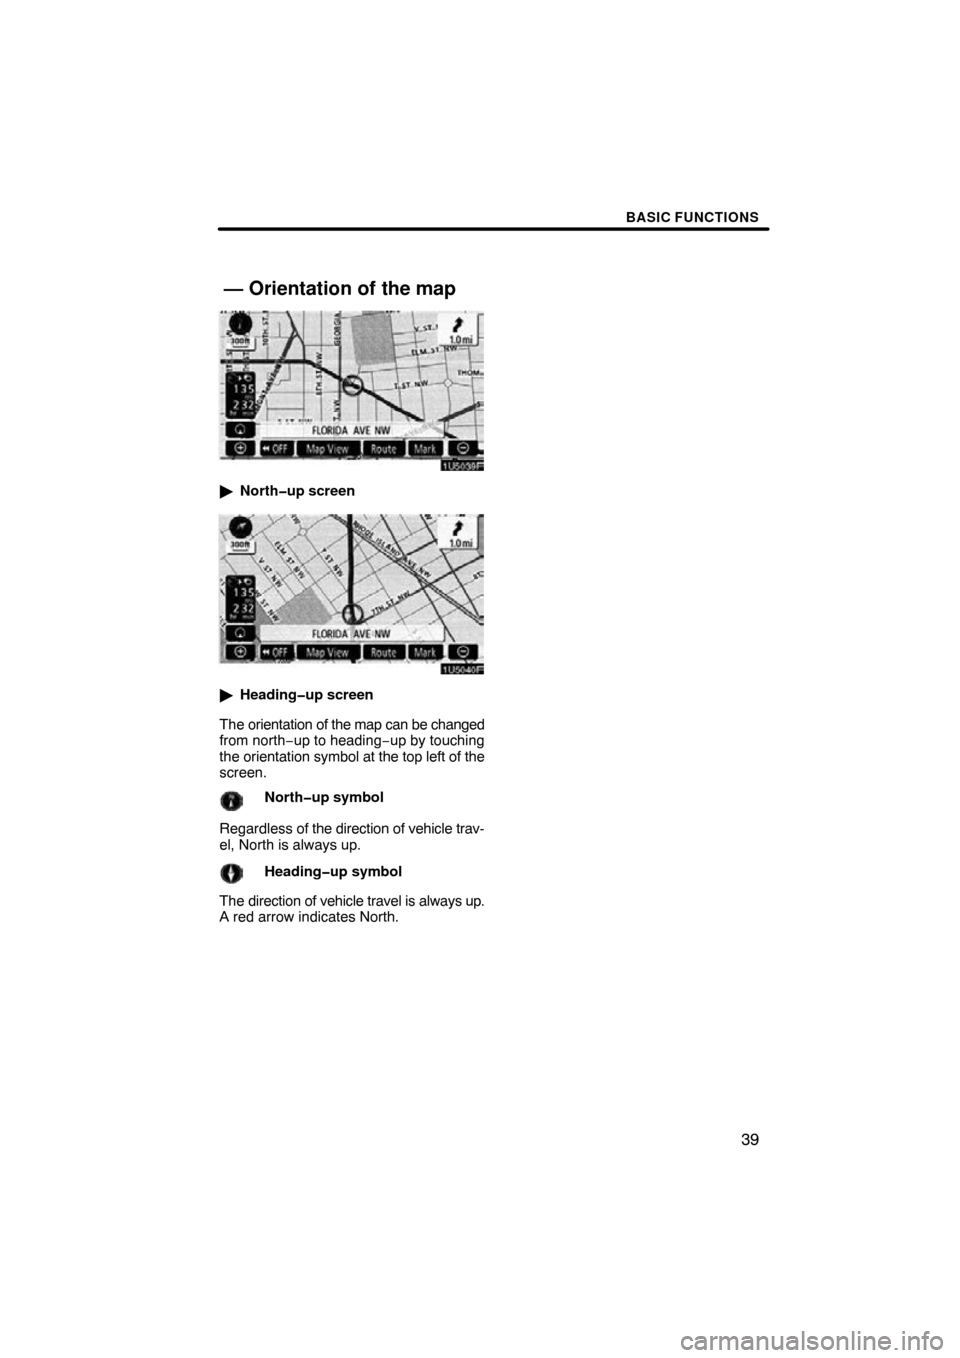 TOYOTA SIENNA 2009 XL20 / 2.G Navigation Manual BASIC FUNCTIONS
39
North�up screen
Heading�up screen
The orientation of the map can be changed
from north− up to heading −up by touching
the orientation symbol at the top left of the
screen.
Nor